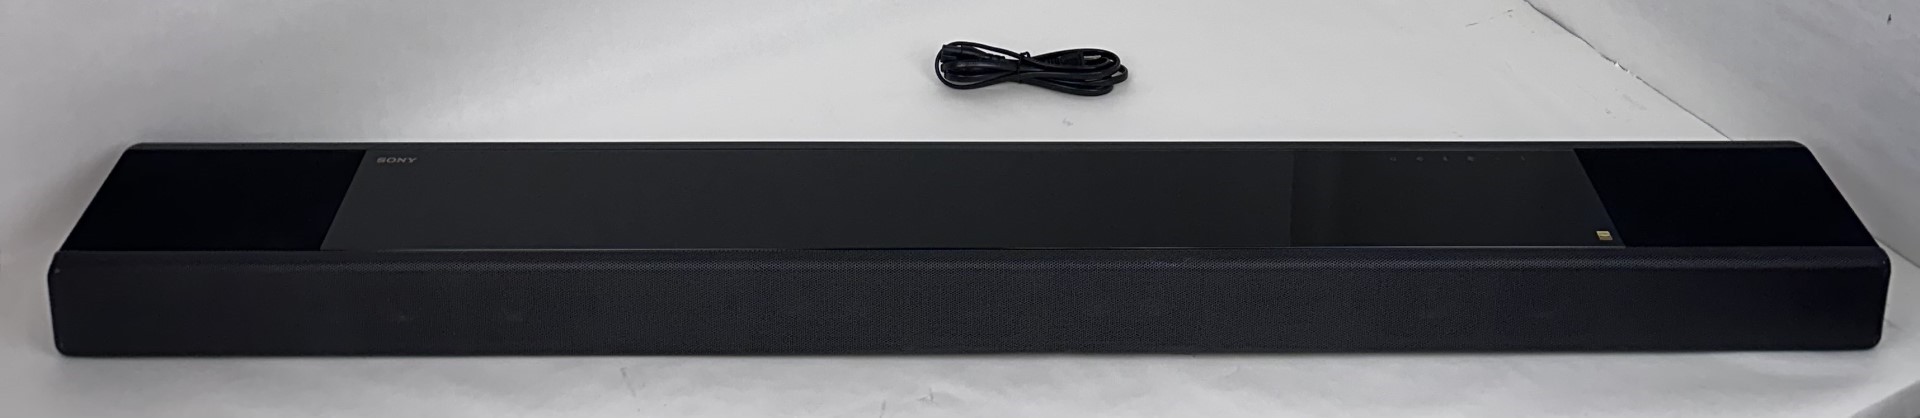 Sony HT-A7000 7.1.2 Channel Soundbar with Dolby Atmos - Dent 1285 U